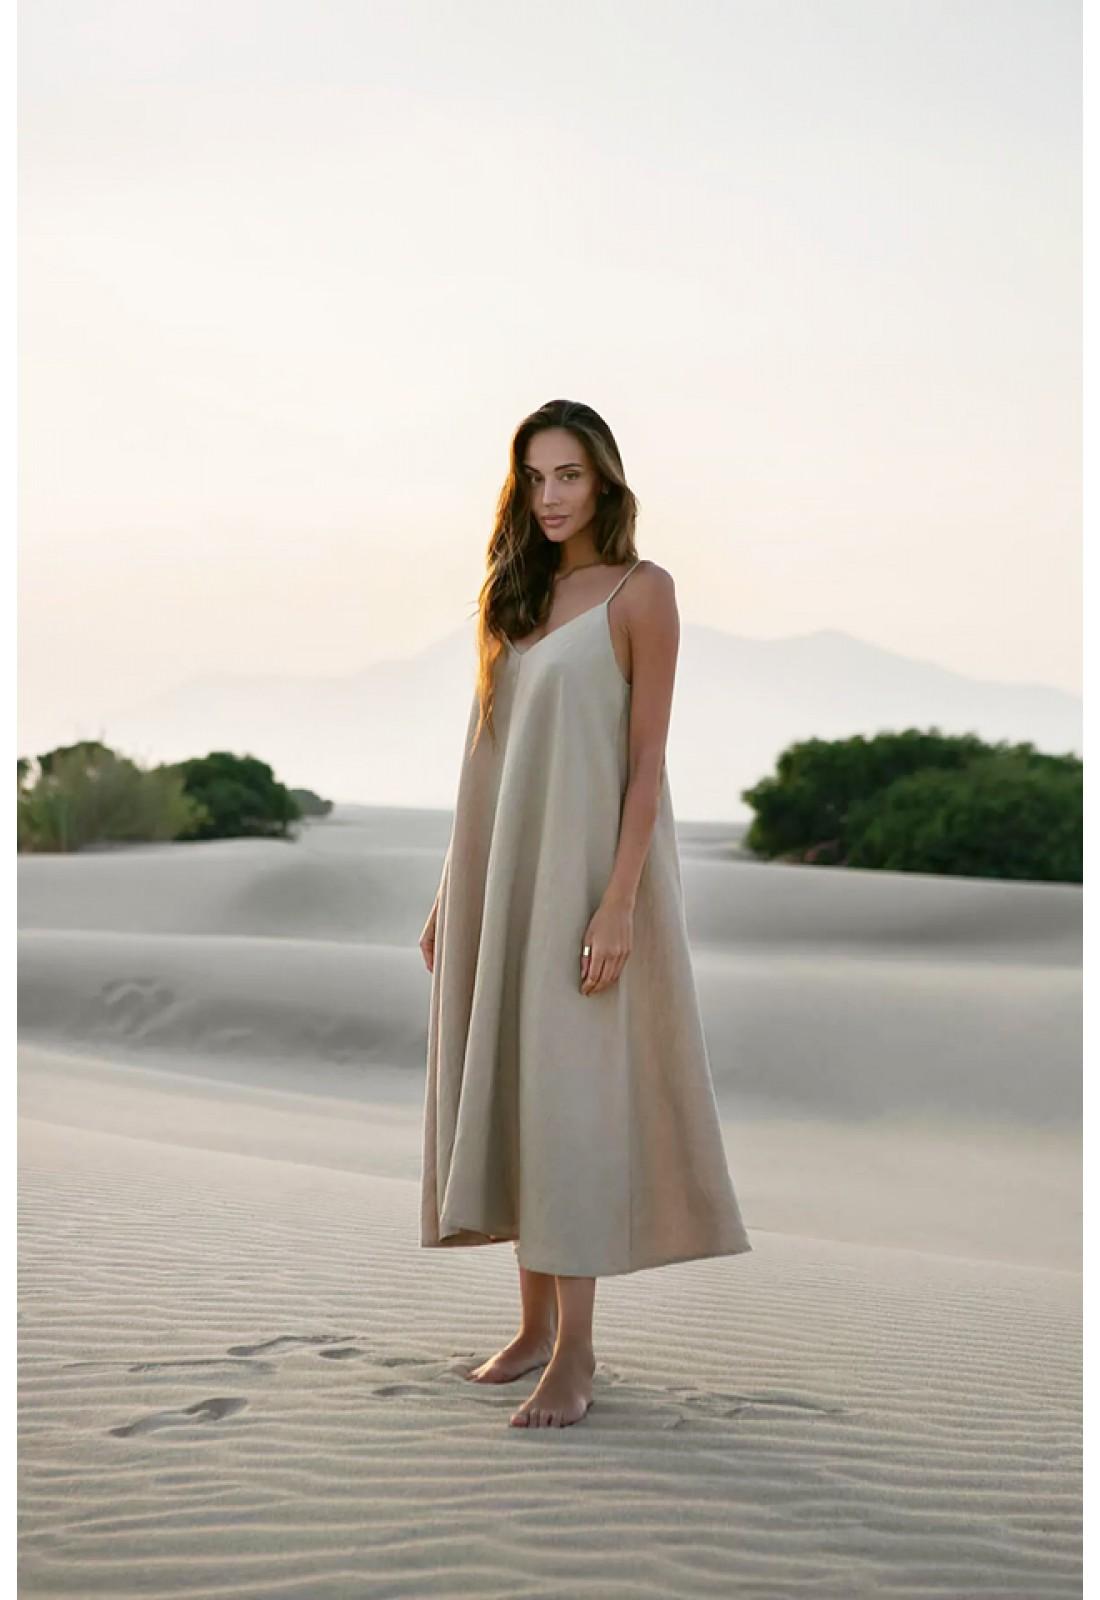 https://www.touchablelinen.com/image/cache/catalog/products/51/Sleeveless-linen-dress-4-1100x1600.jpg